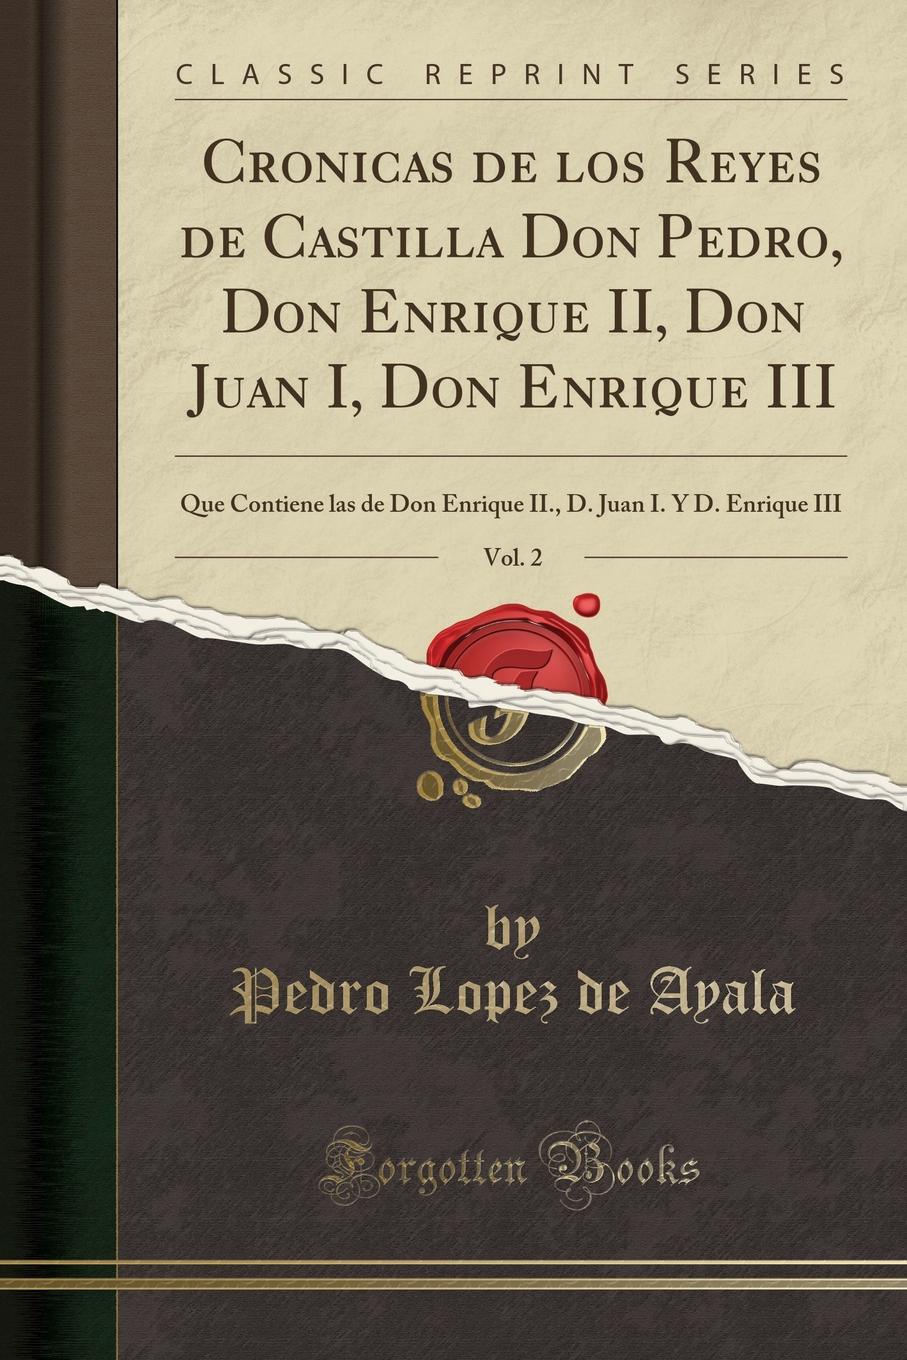 Pedro Lopez de Ayala Cronicas de los Reyes de Castilla Don Pedro, Don Enrique II, Don Juan I, Don Enrique III, Vol. 2. Que Contiene las de Don Enrique II., D. Juan I. Y D. Enrique III (Classic Reprint)